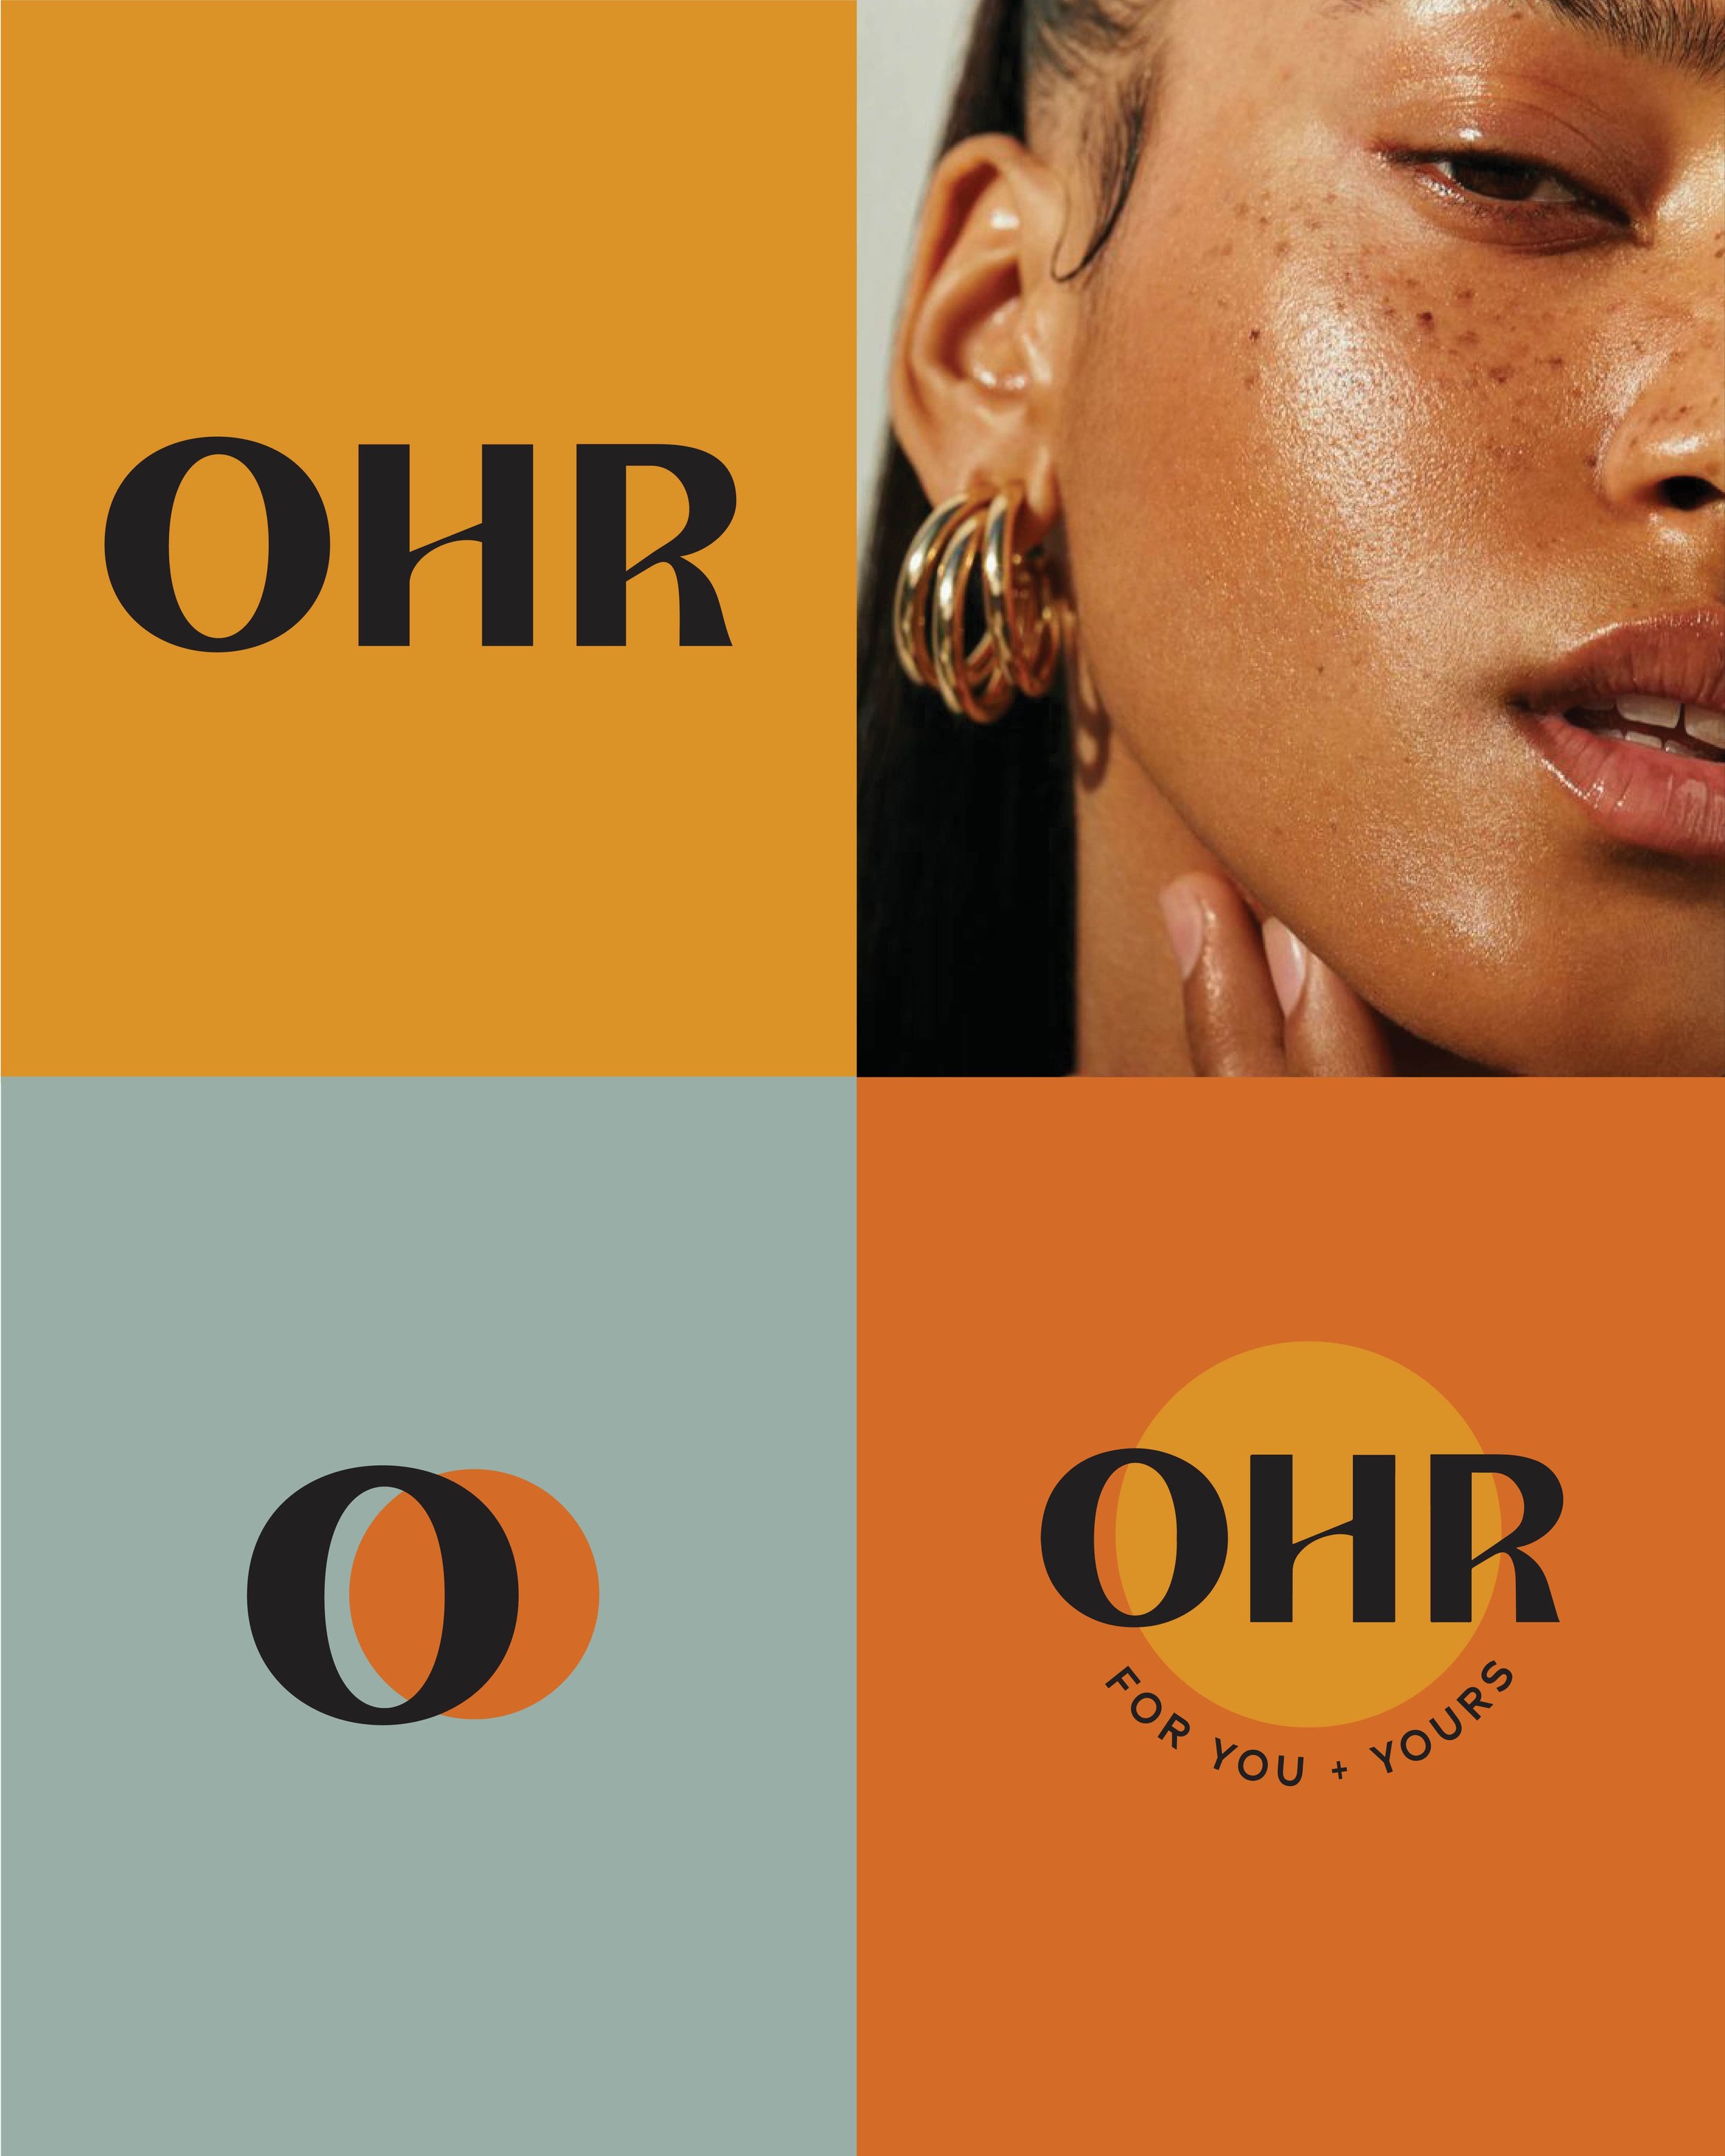 OHR-beauty logo and packaging design-3.jpg